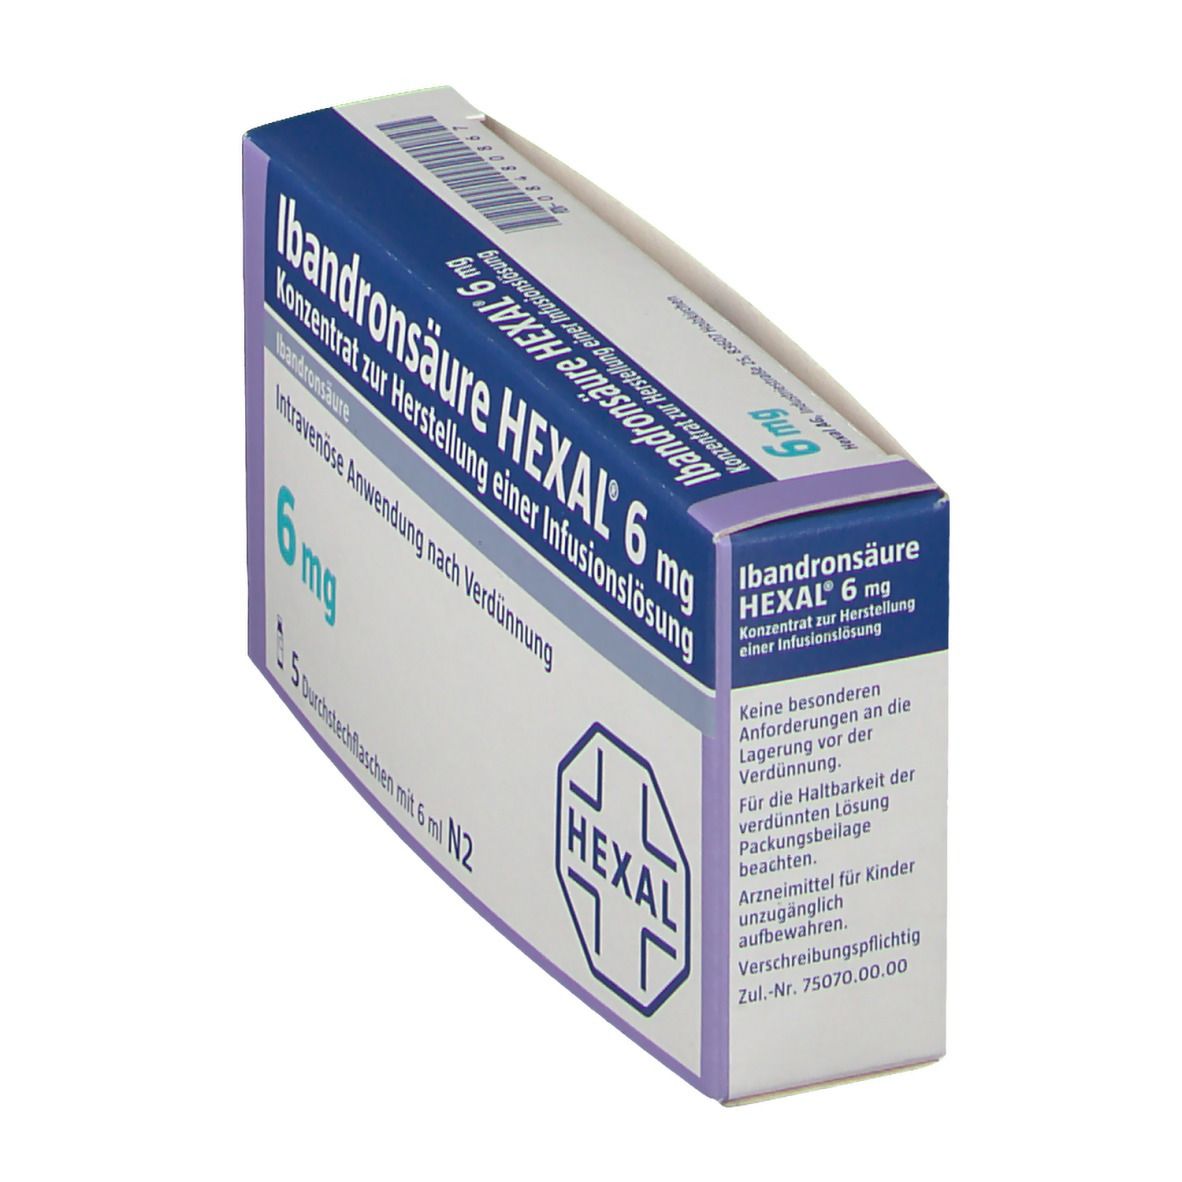 Ibandronsäure HEXAL® 6 mg